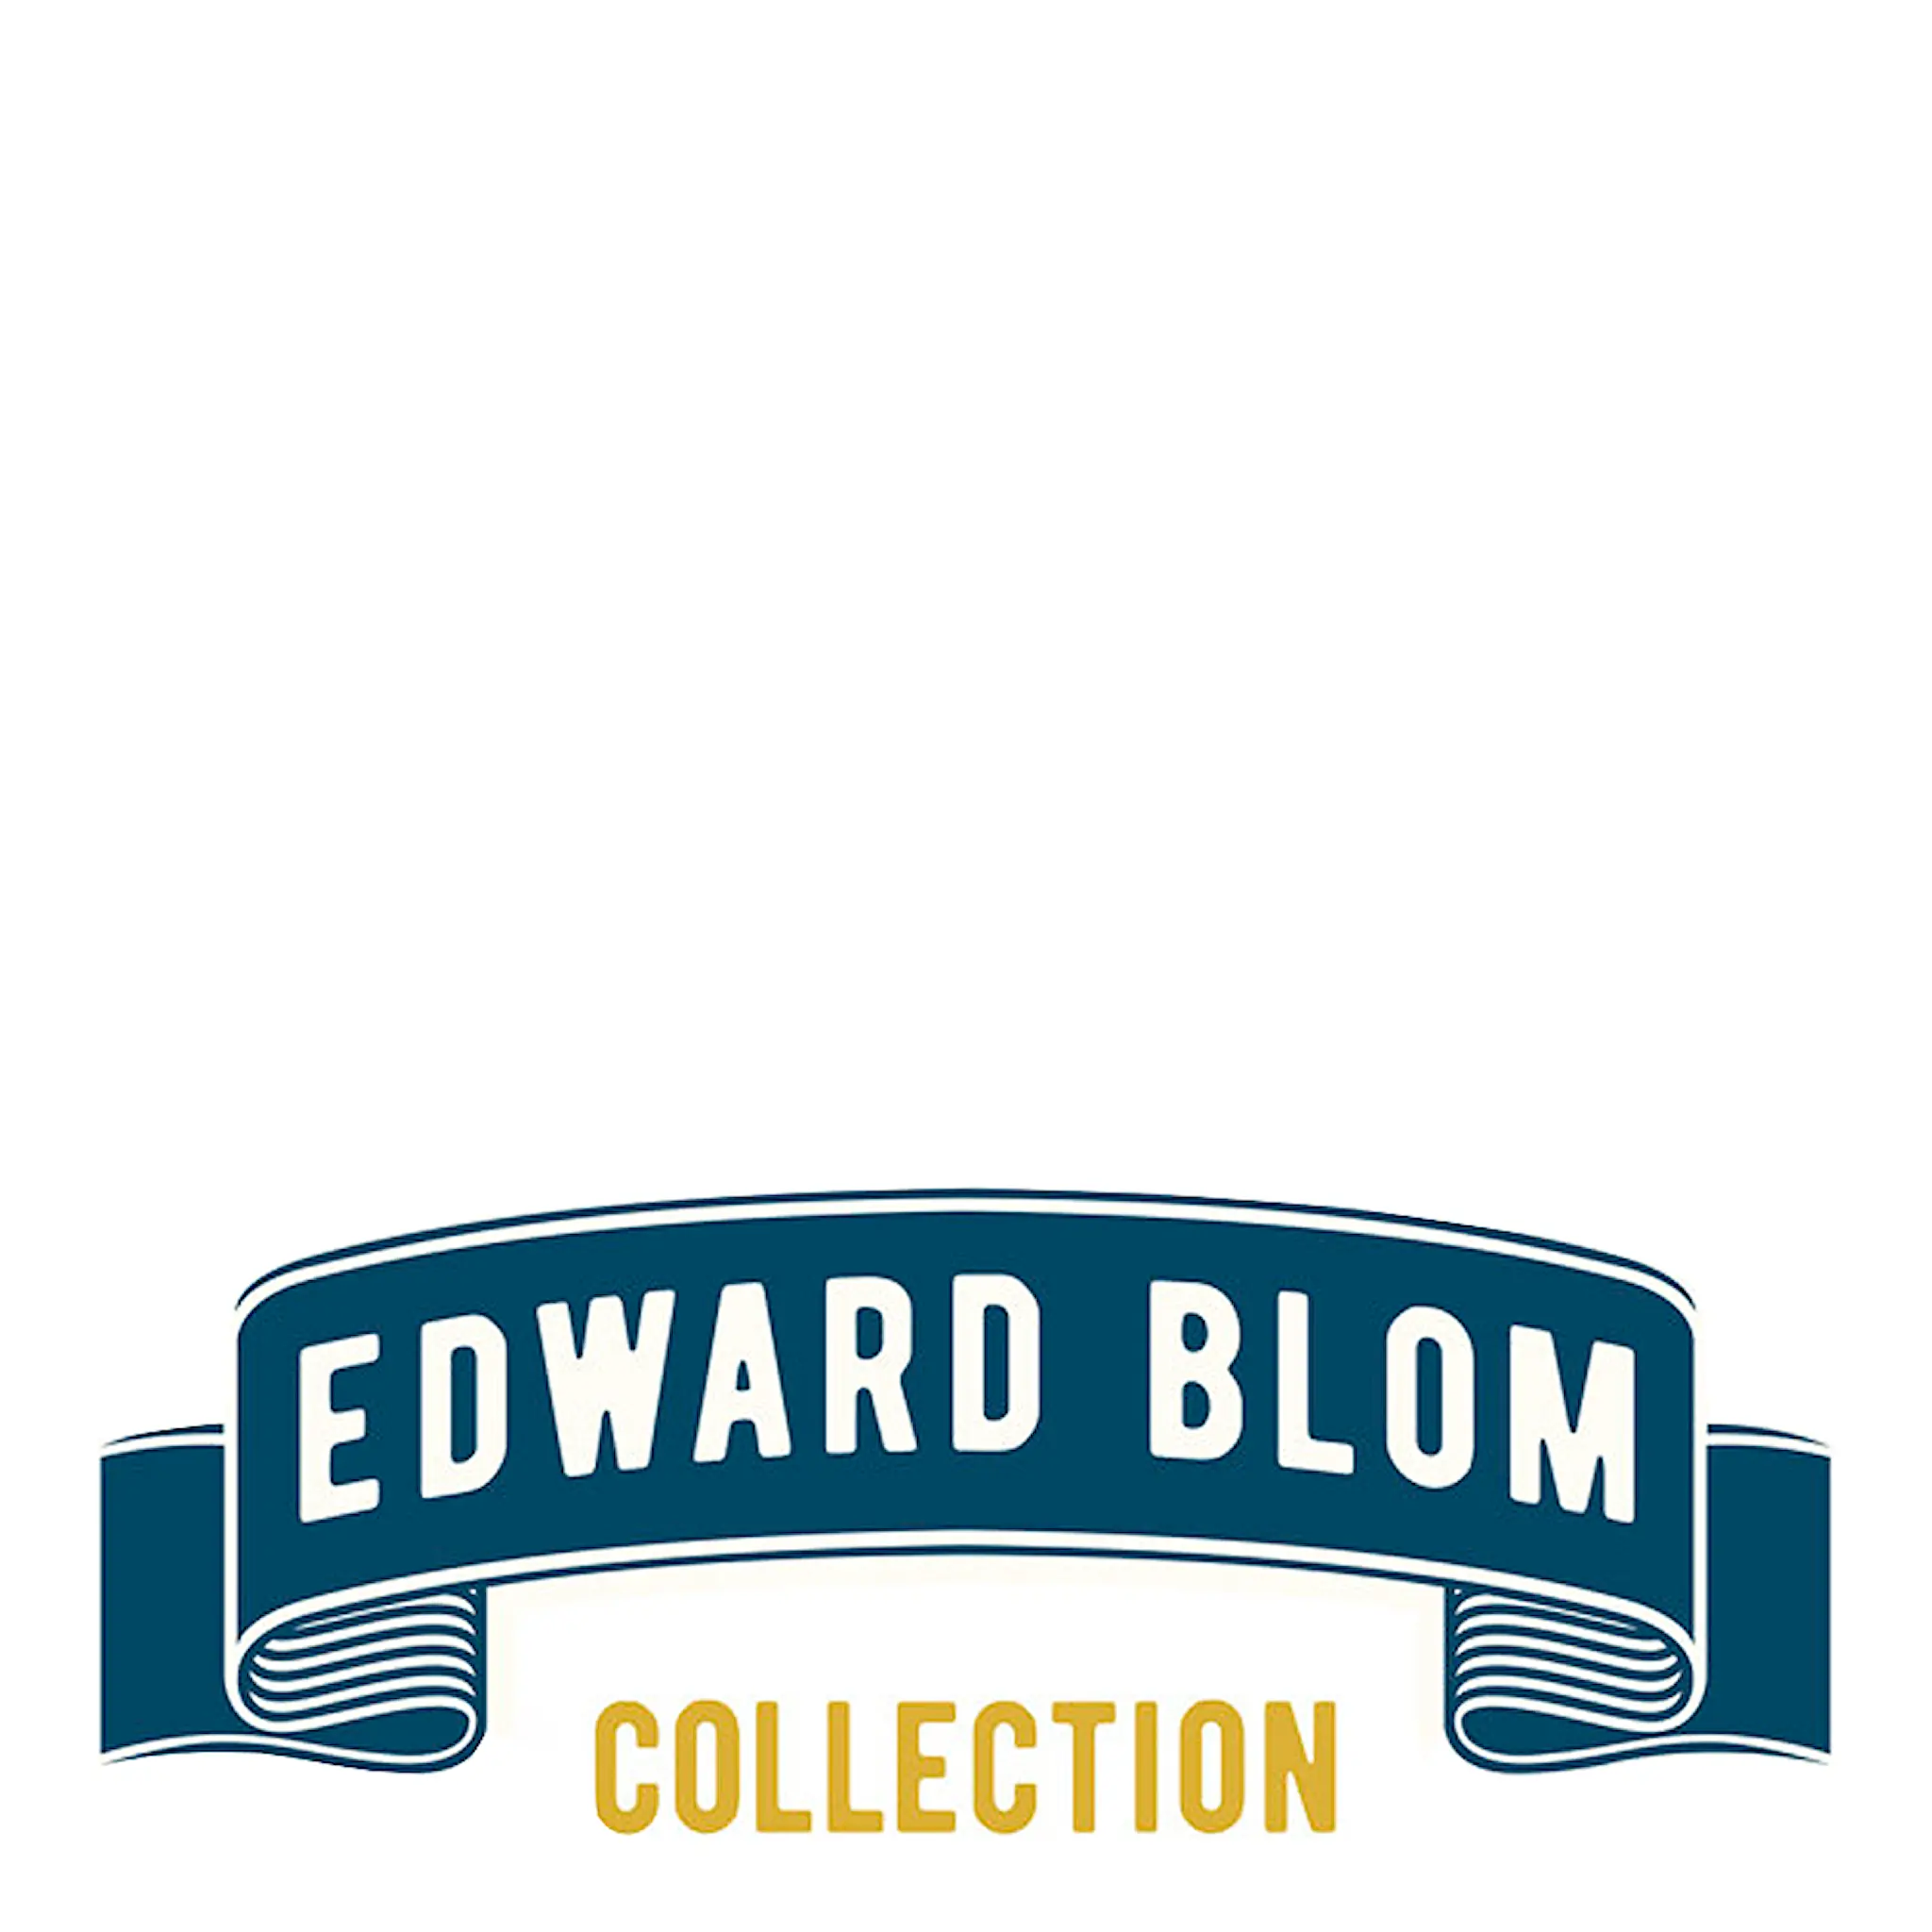 Edward Blom Collection Olutlasi Nro. 6